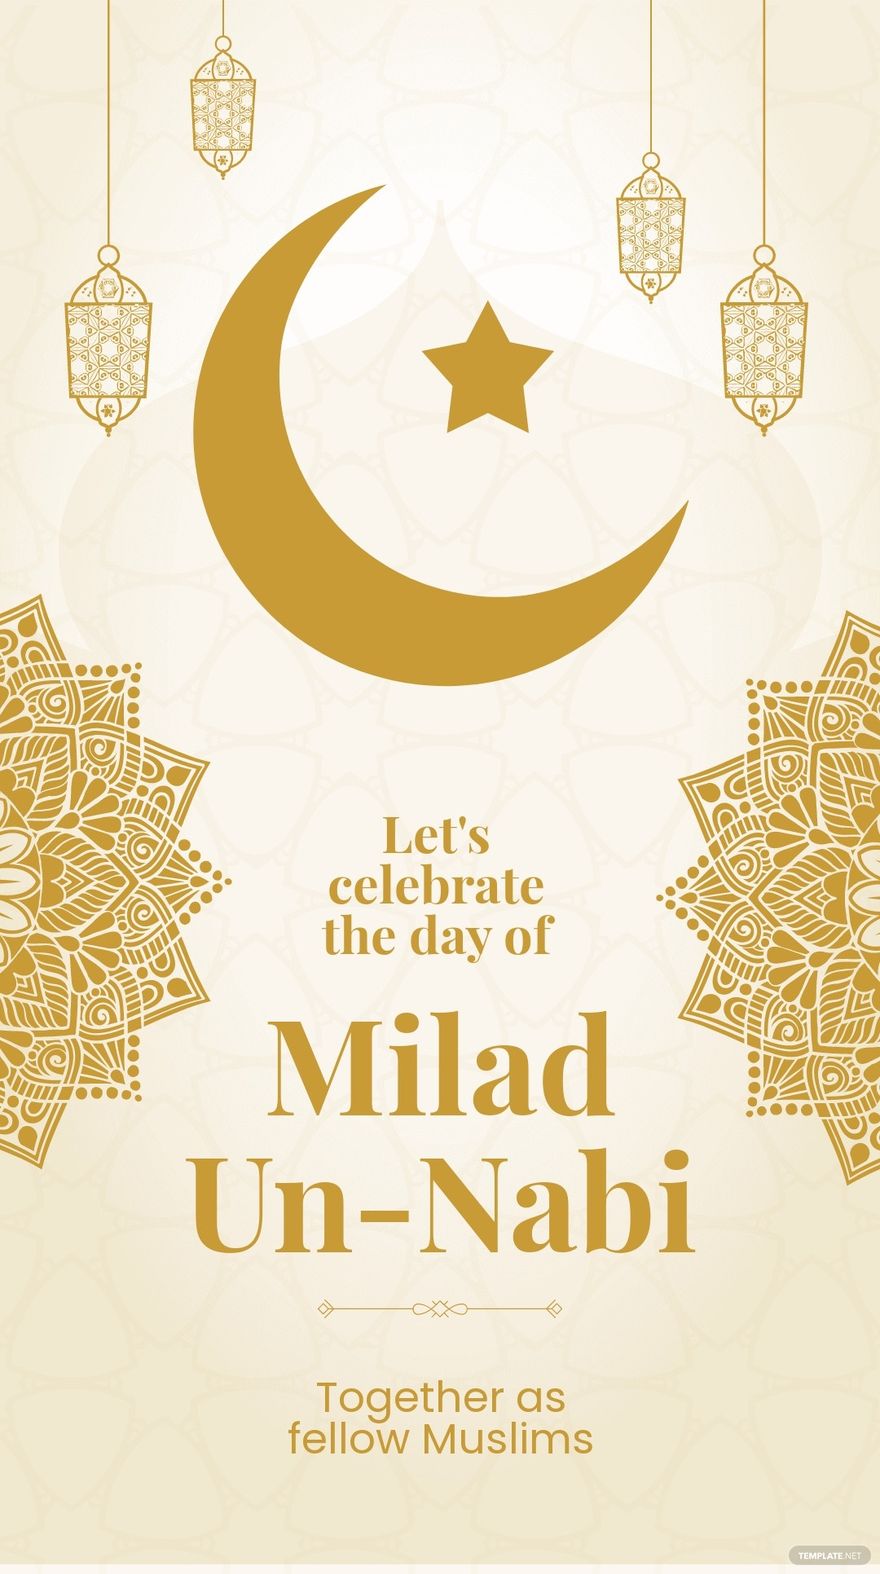 Milad-un-nabi Celebration Whatsapp Post Template